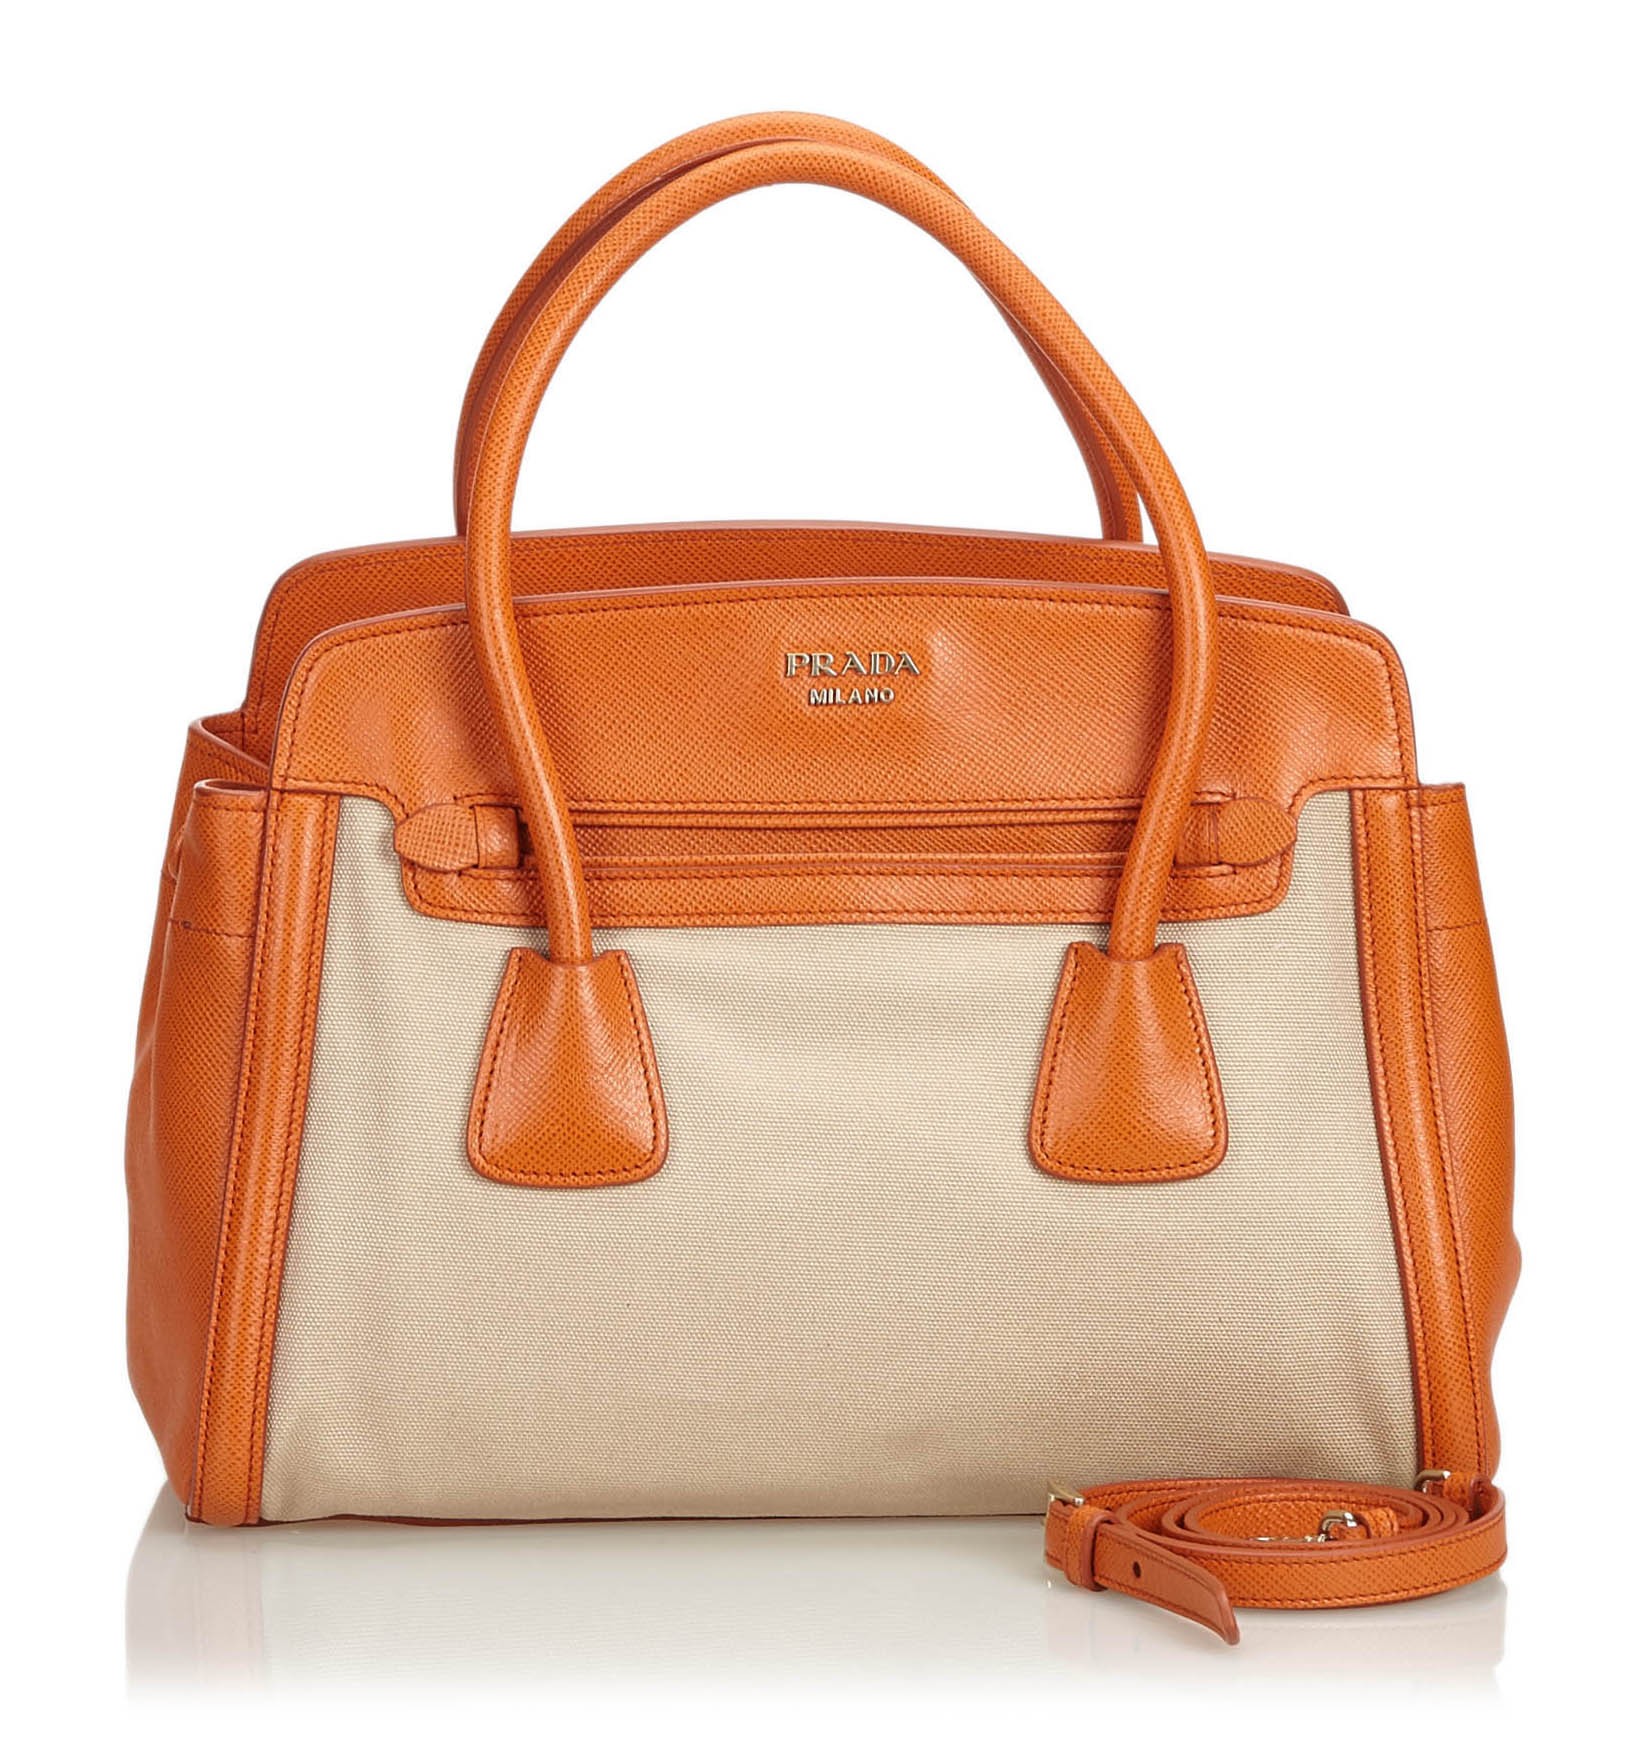 prada vintage canvas satchel bag brown beige leather handbag luxury high quality